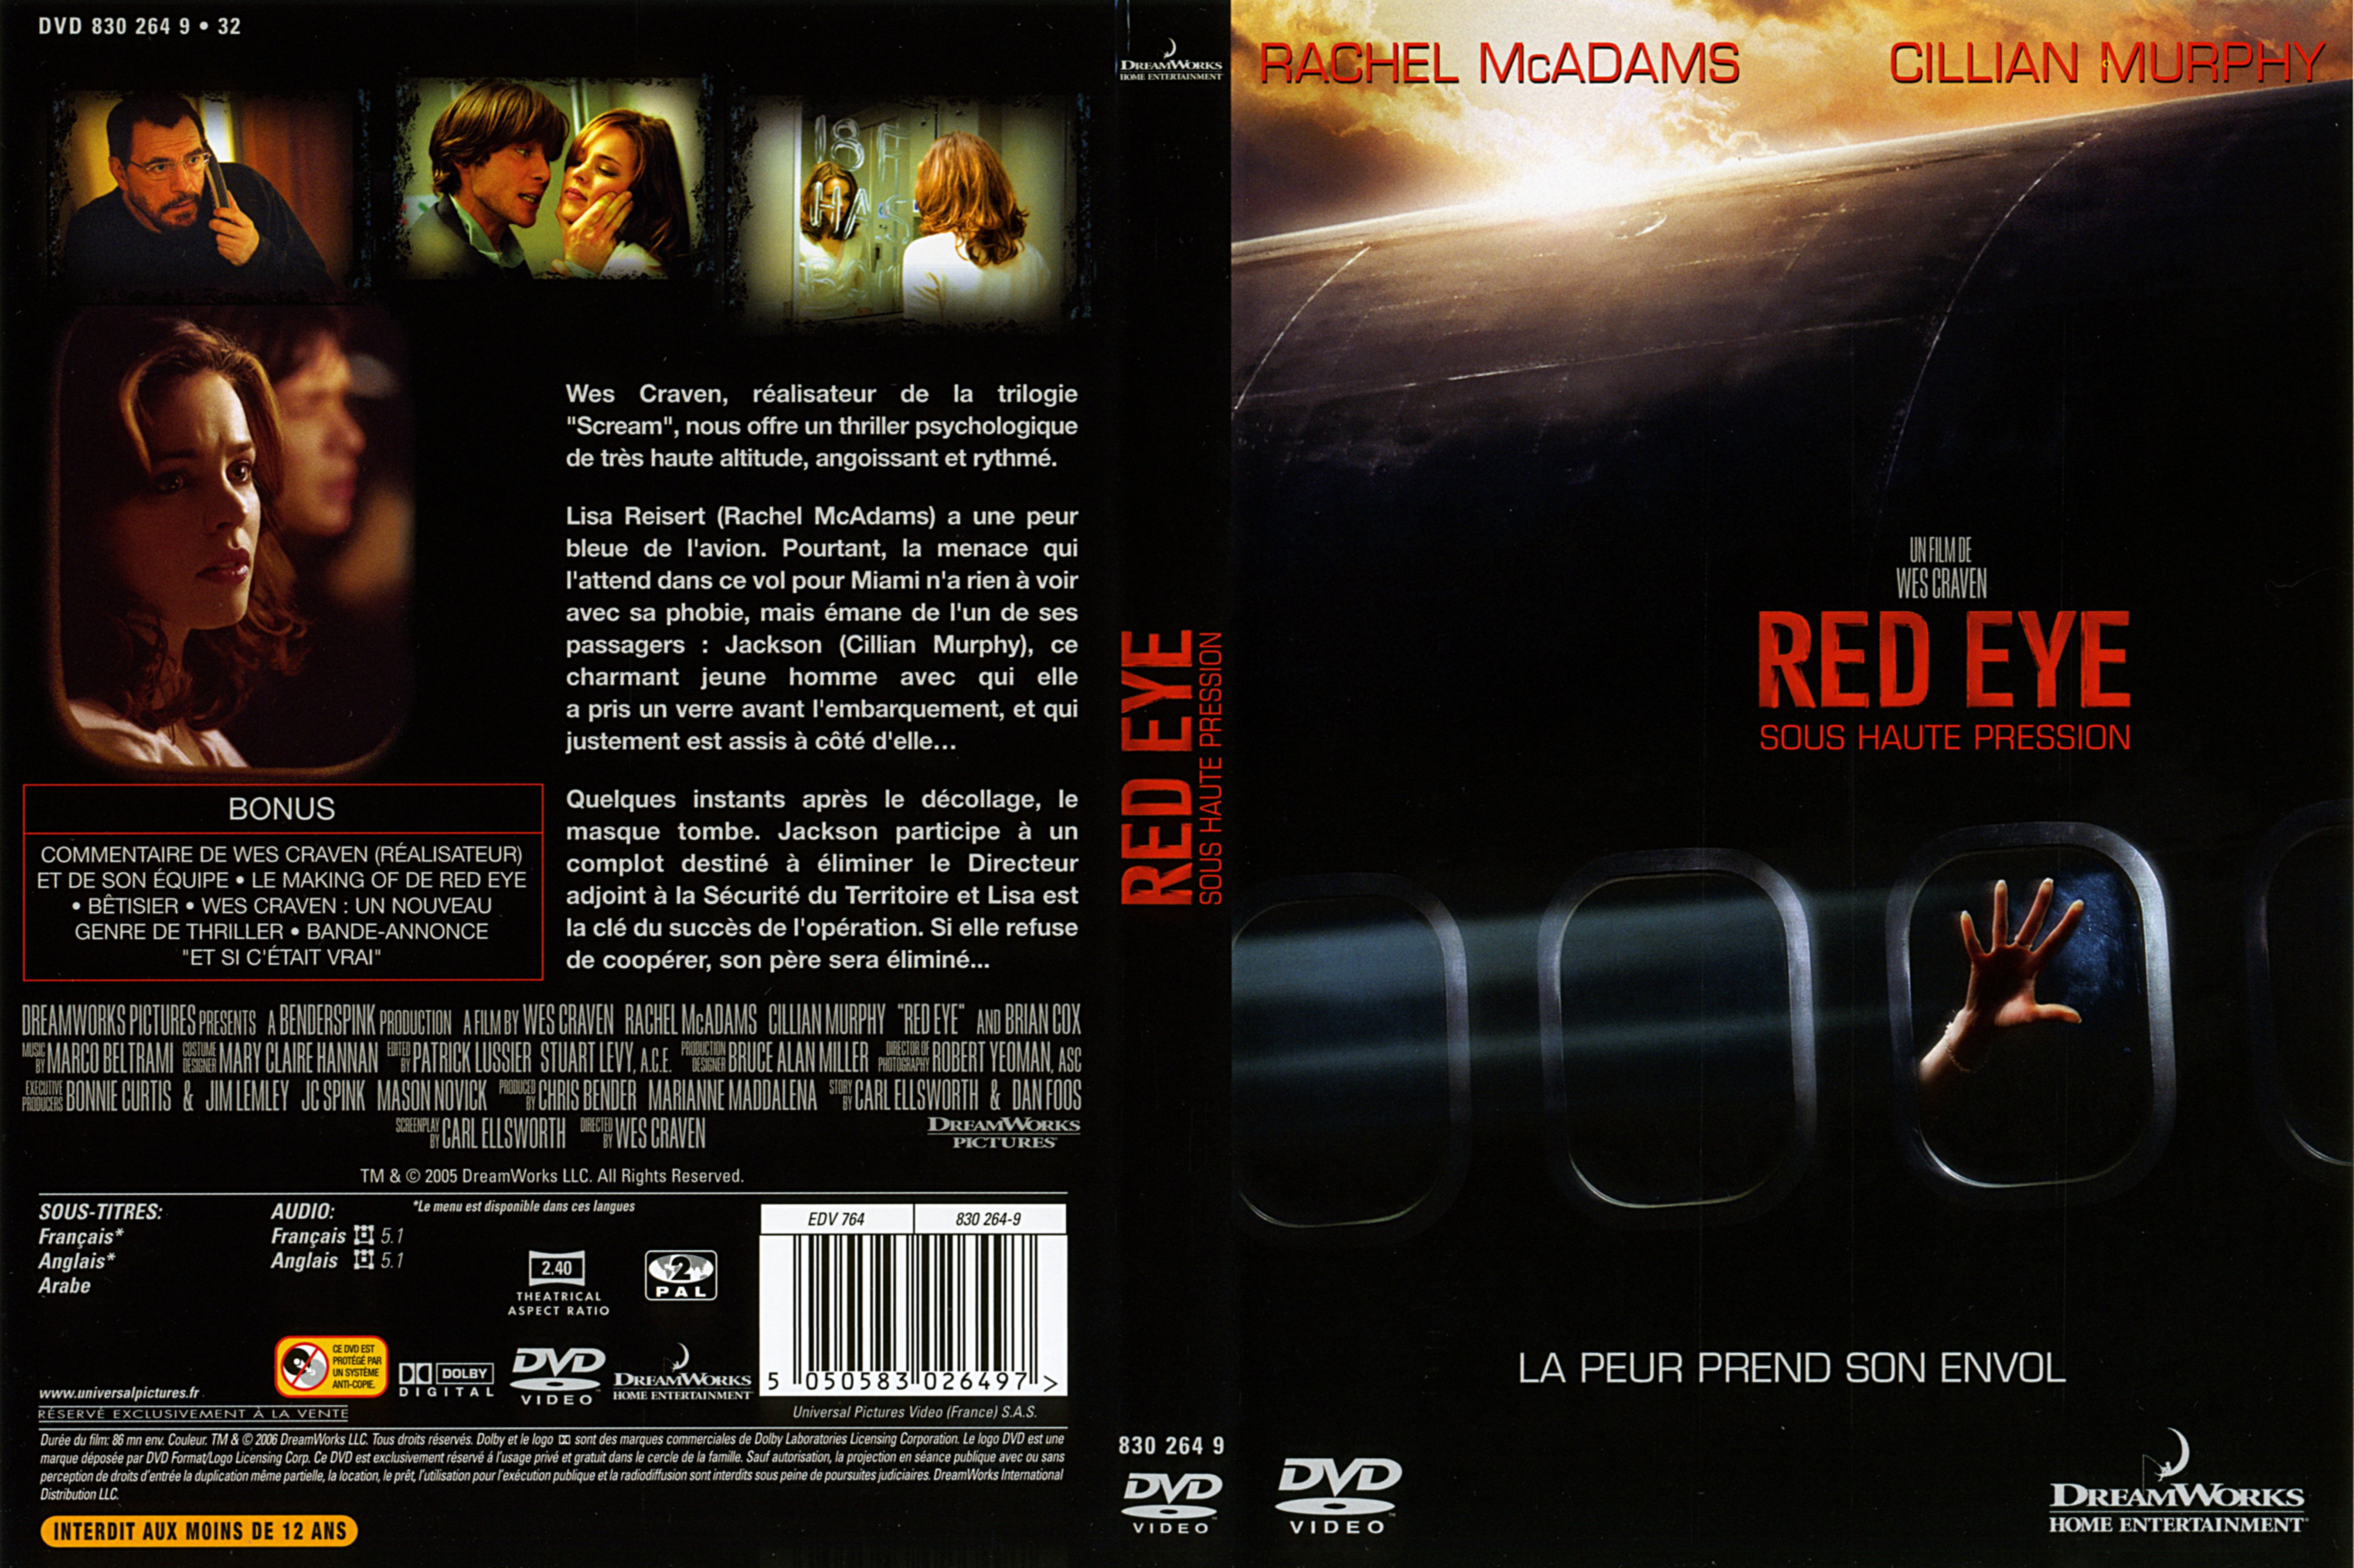 Jaquette DVD Red eye v2